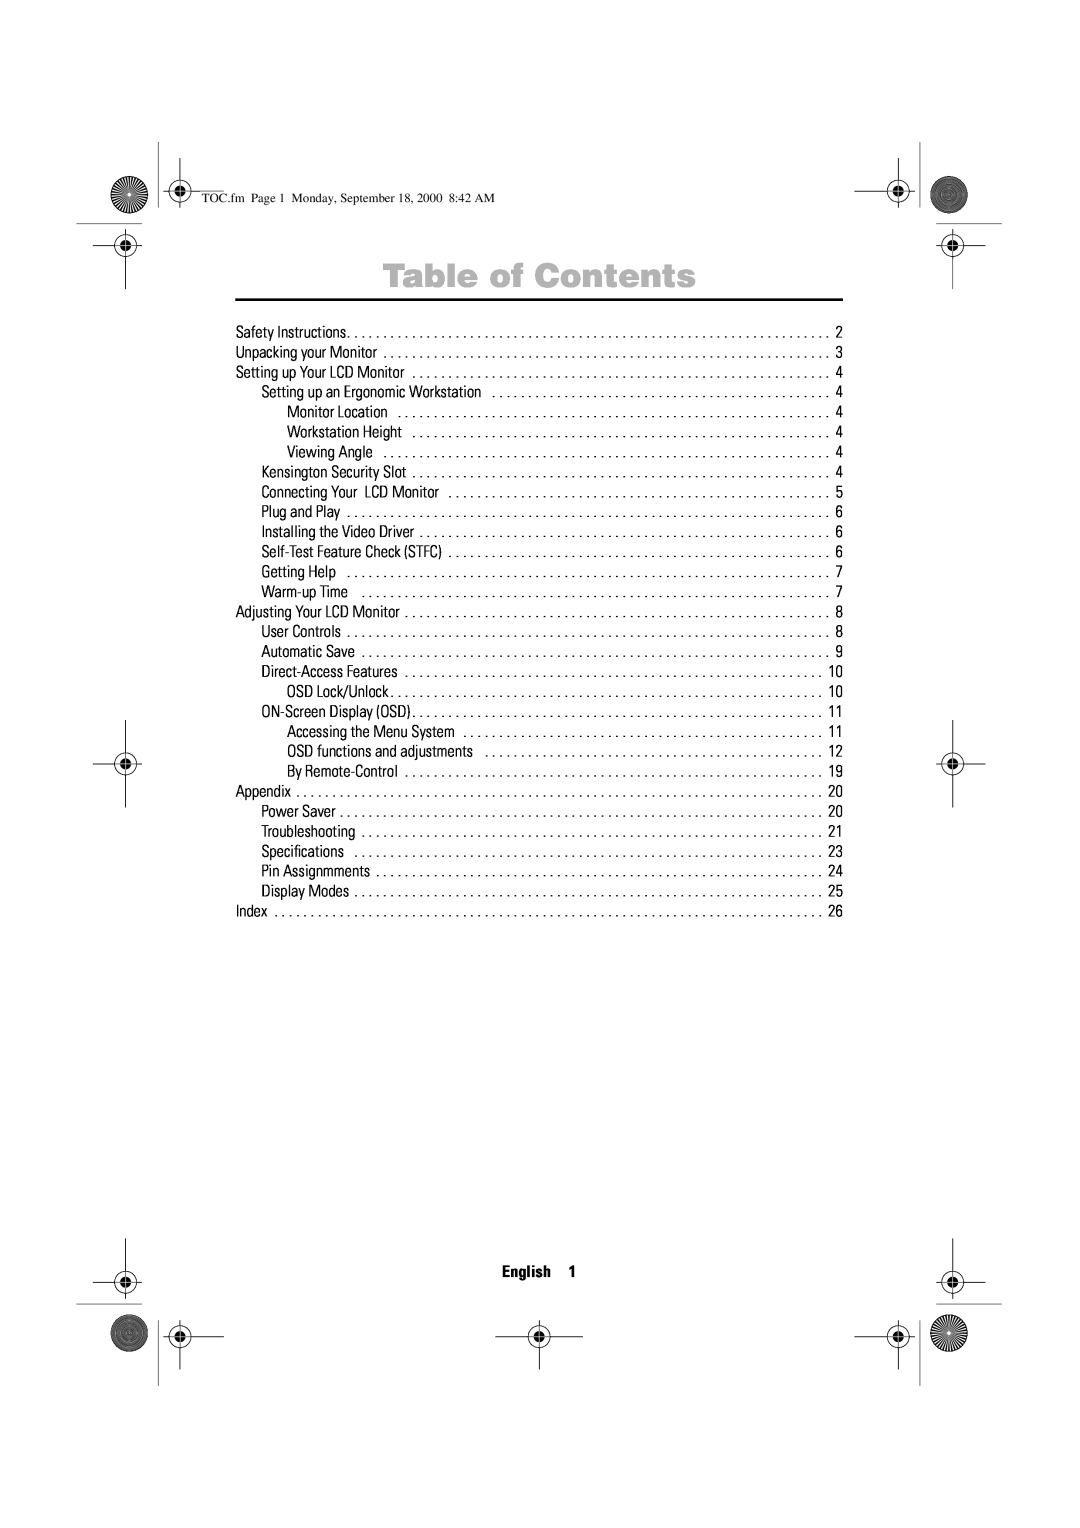 Sharp 210T Table of Contents, English, Portu- Italiano Español Deutsch Français, Workstation Height, Monitor Location 